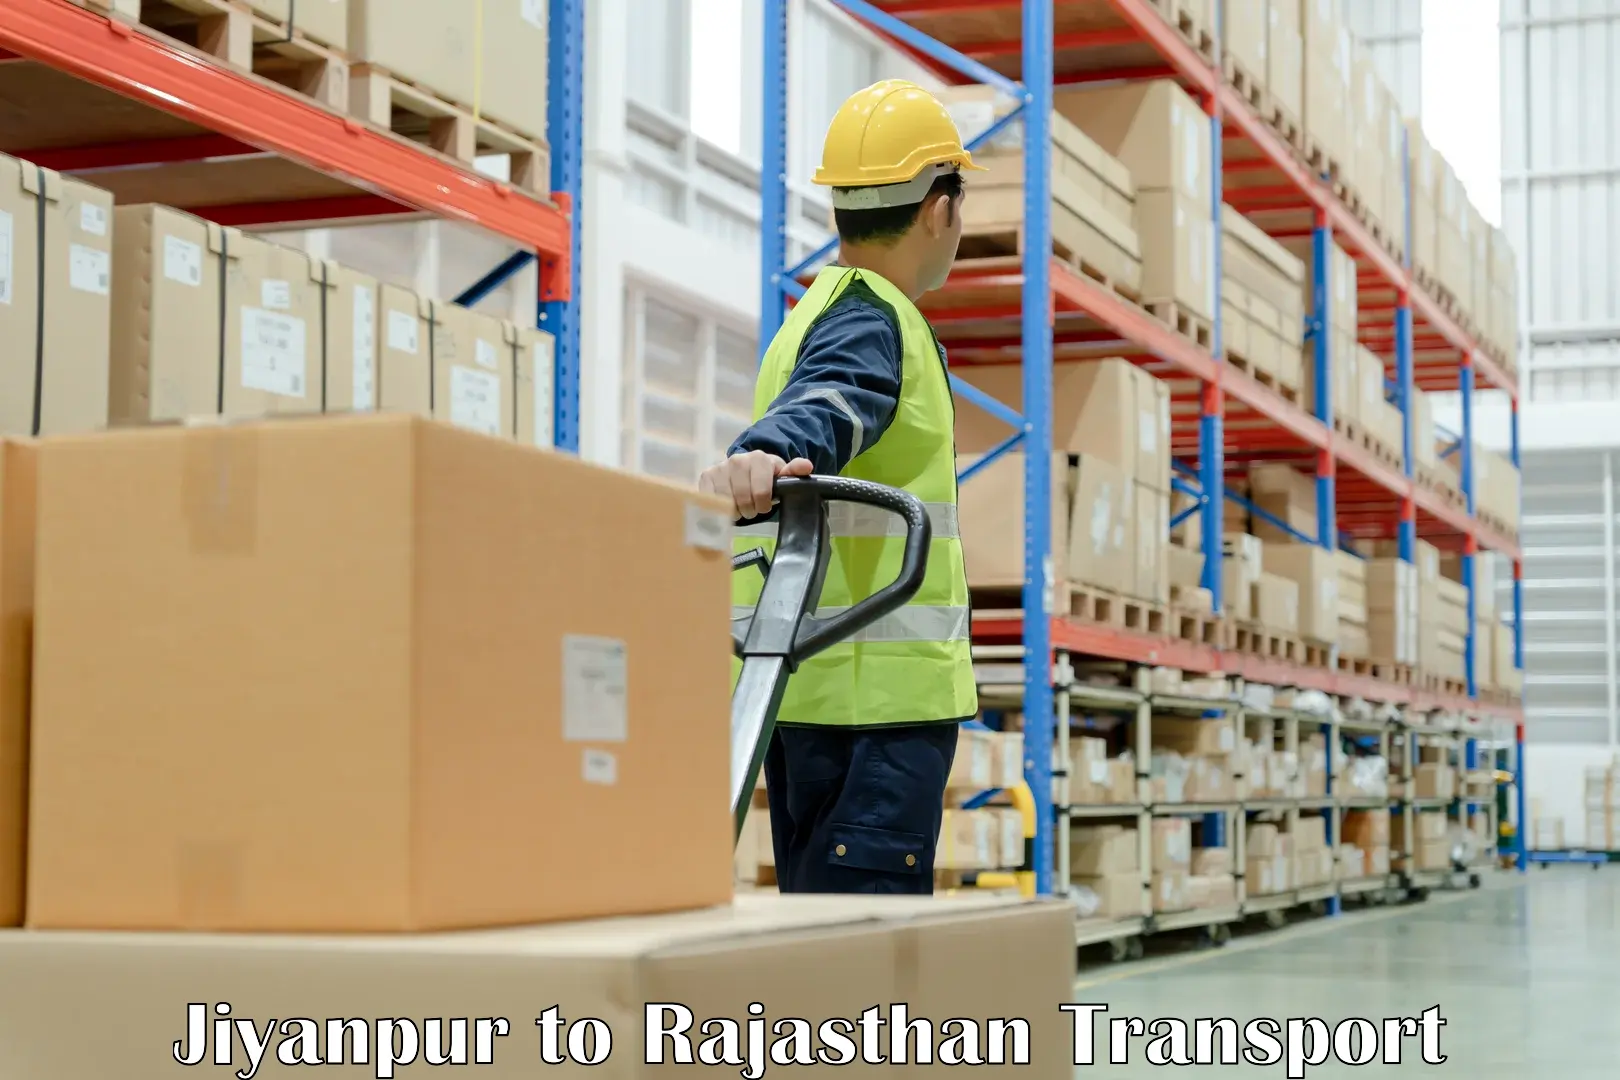 Shipping partner Jiyanpur to Rajasthan